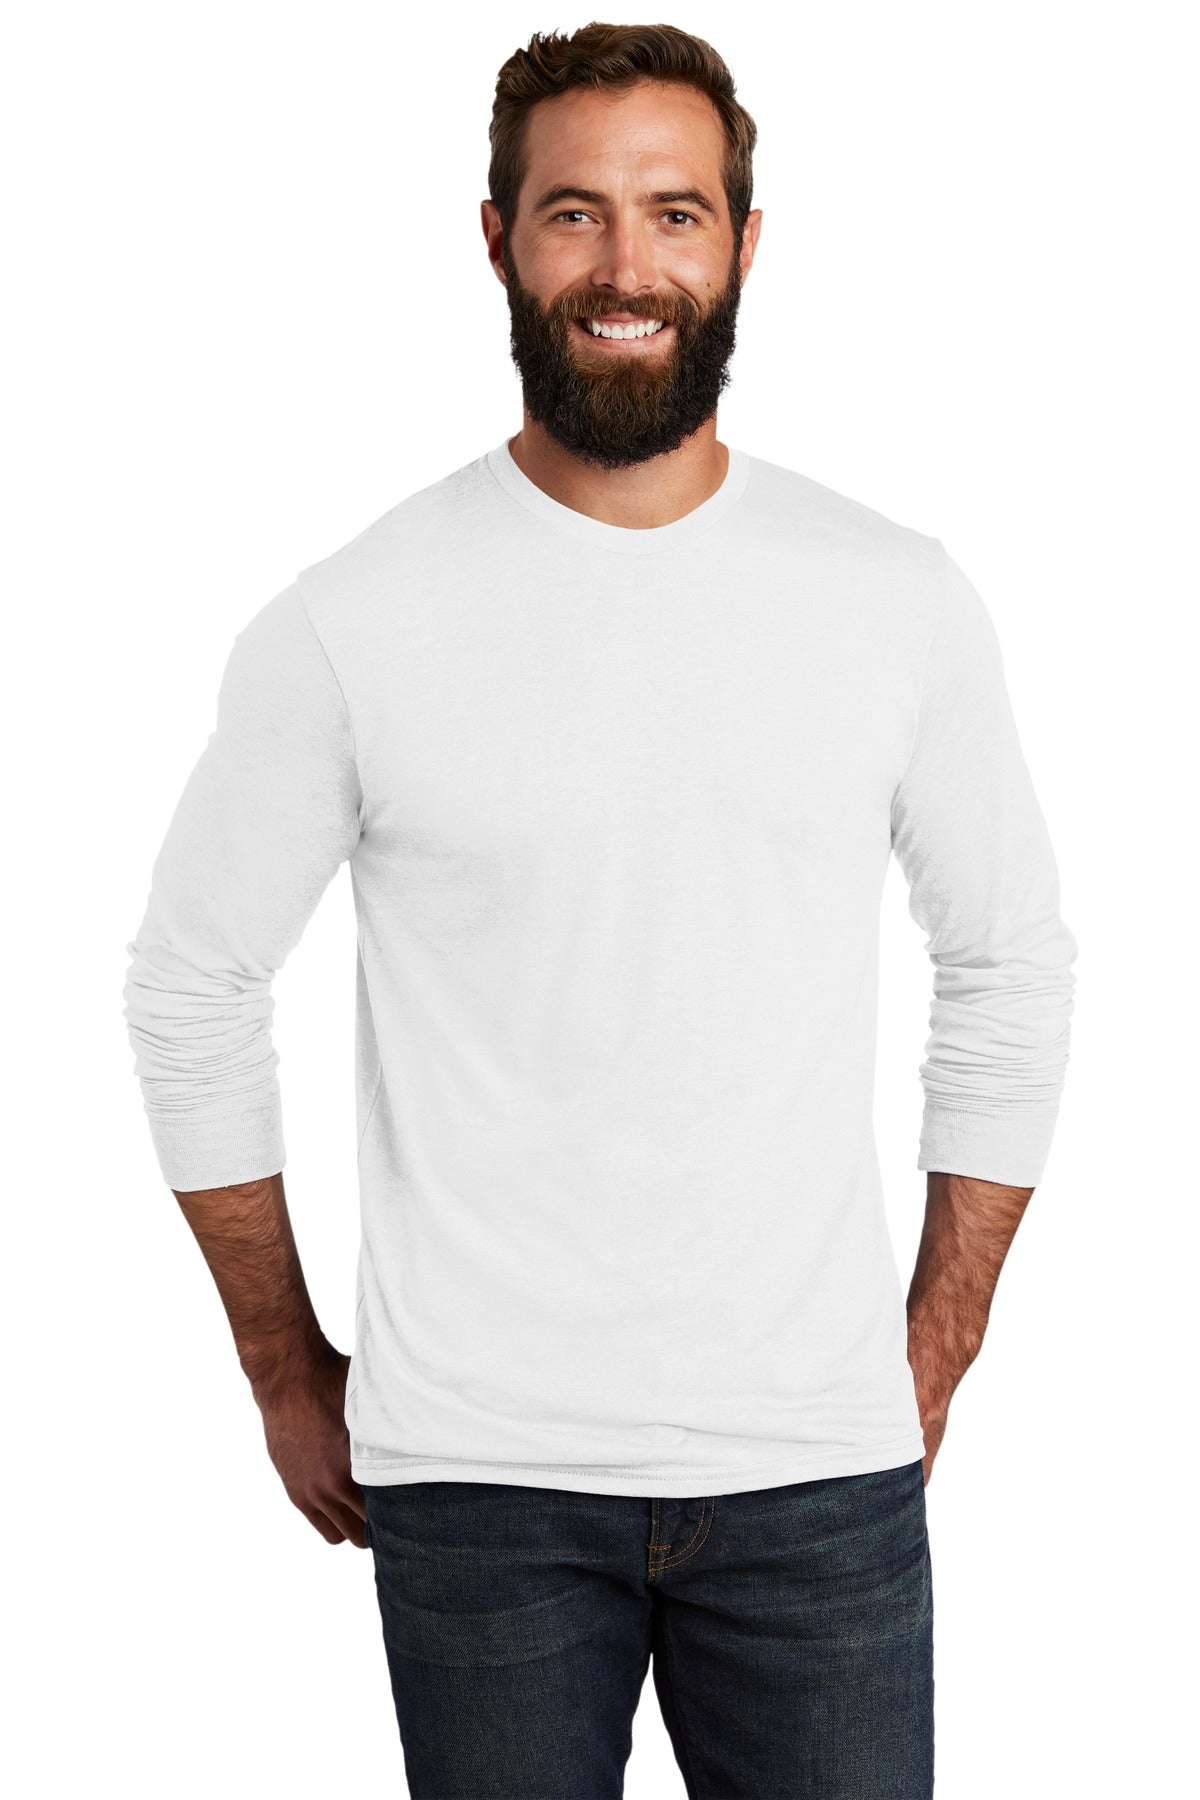 Photo of AllMade T-Shirts AL6004  color  Fairly White